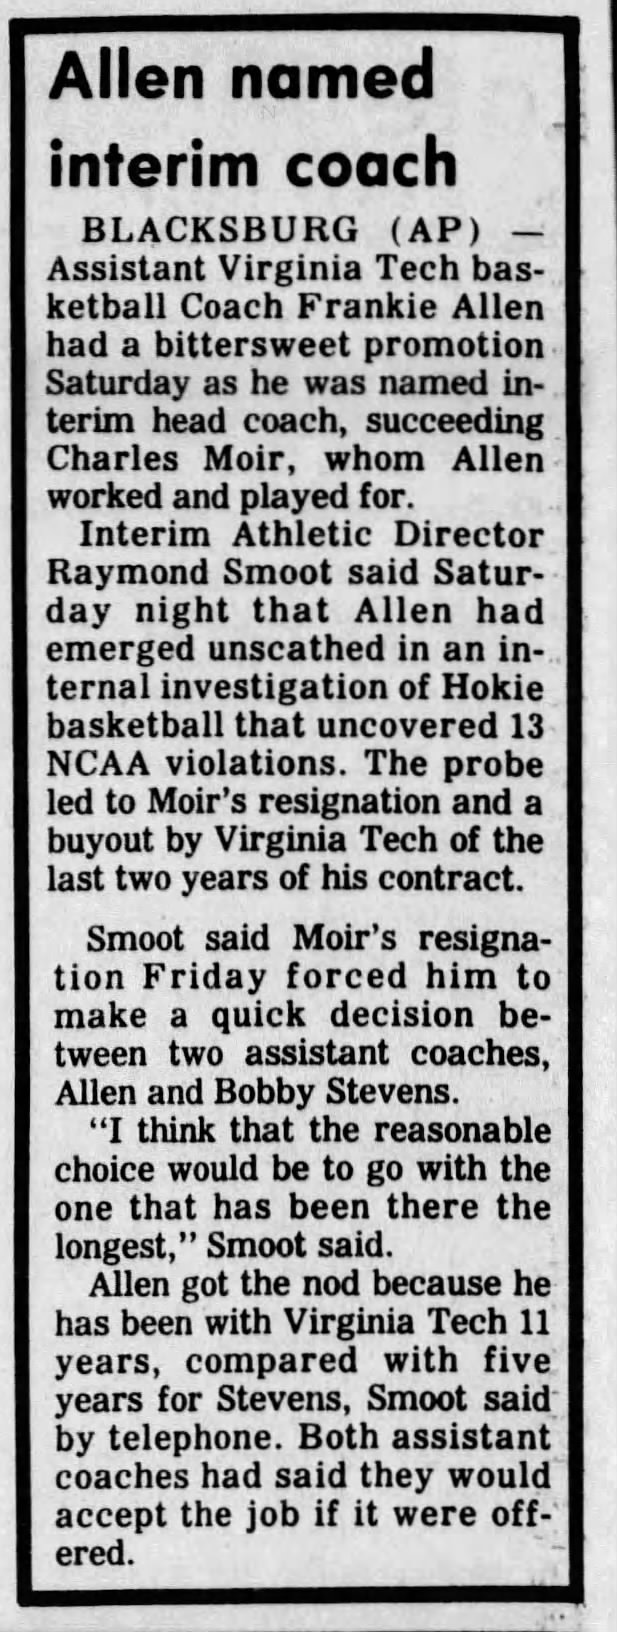 Allen named interim coach